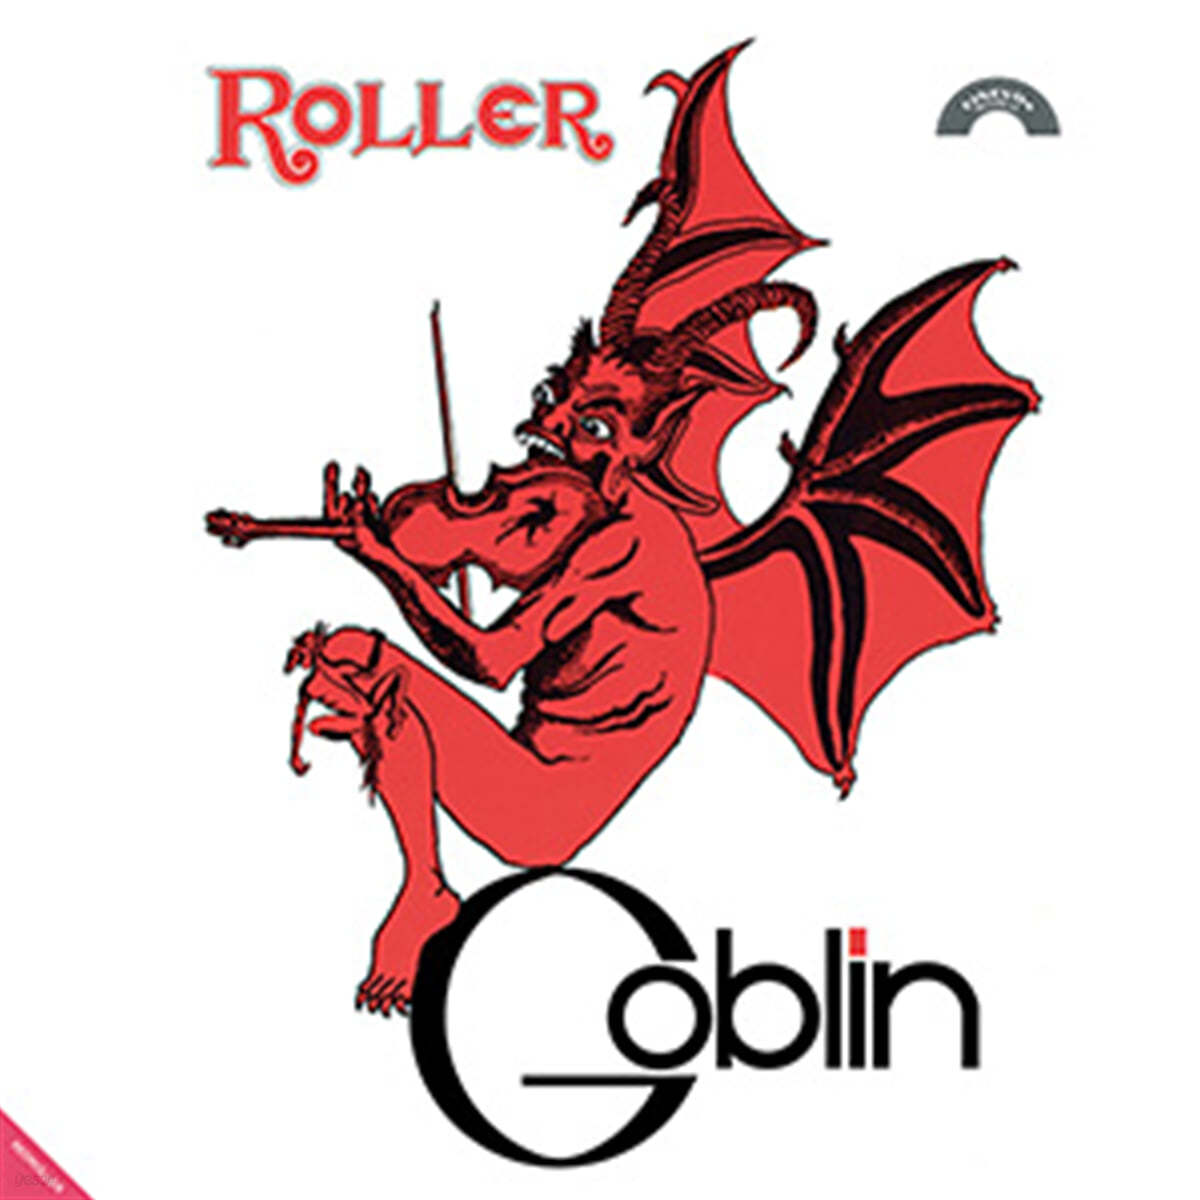 Goblin (고블린) - 2집 Roller [투명 퍼플 컬러 LP]